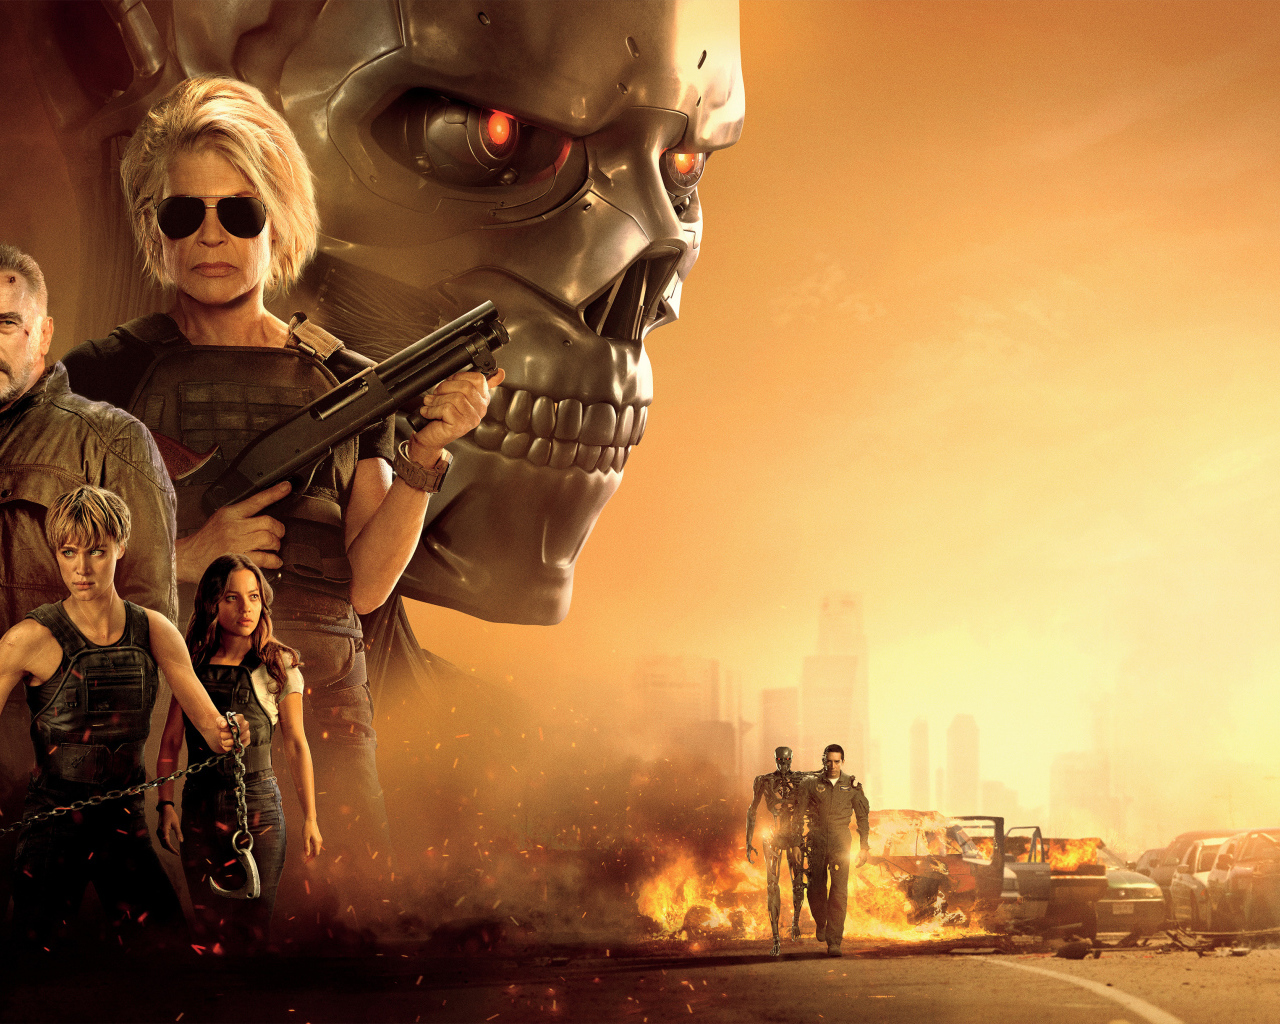 Poster for the new movie Terminator: Dark Fate, 2020